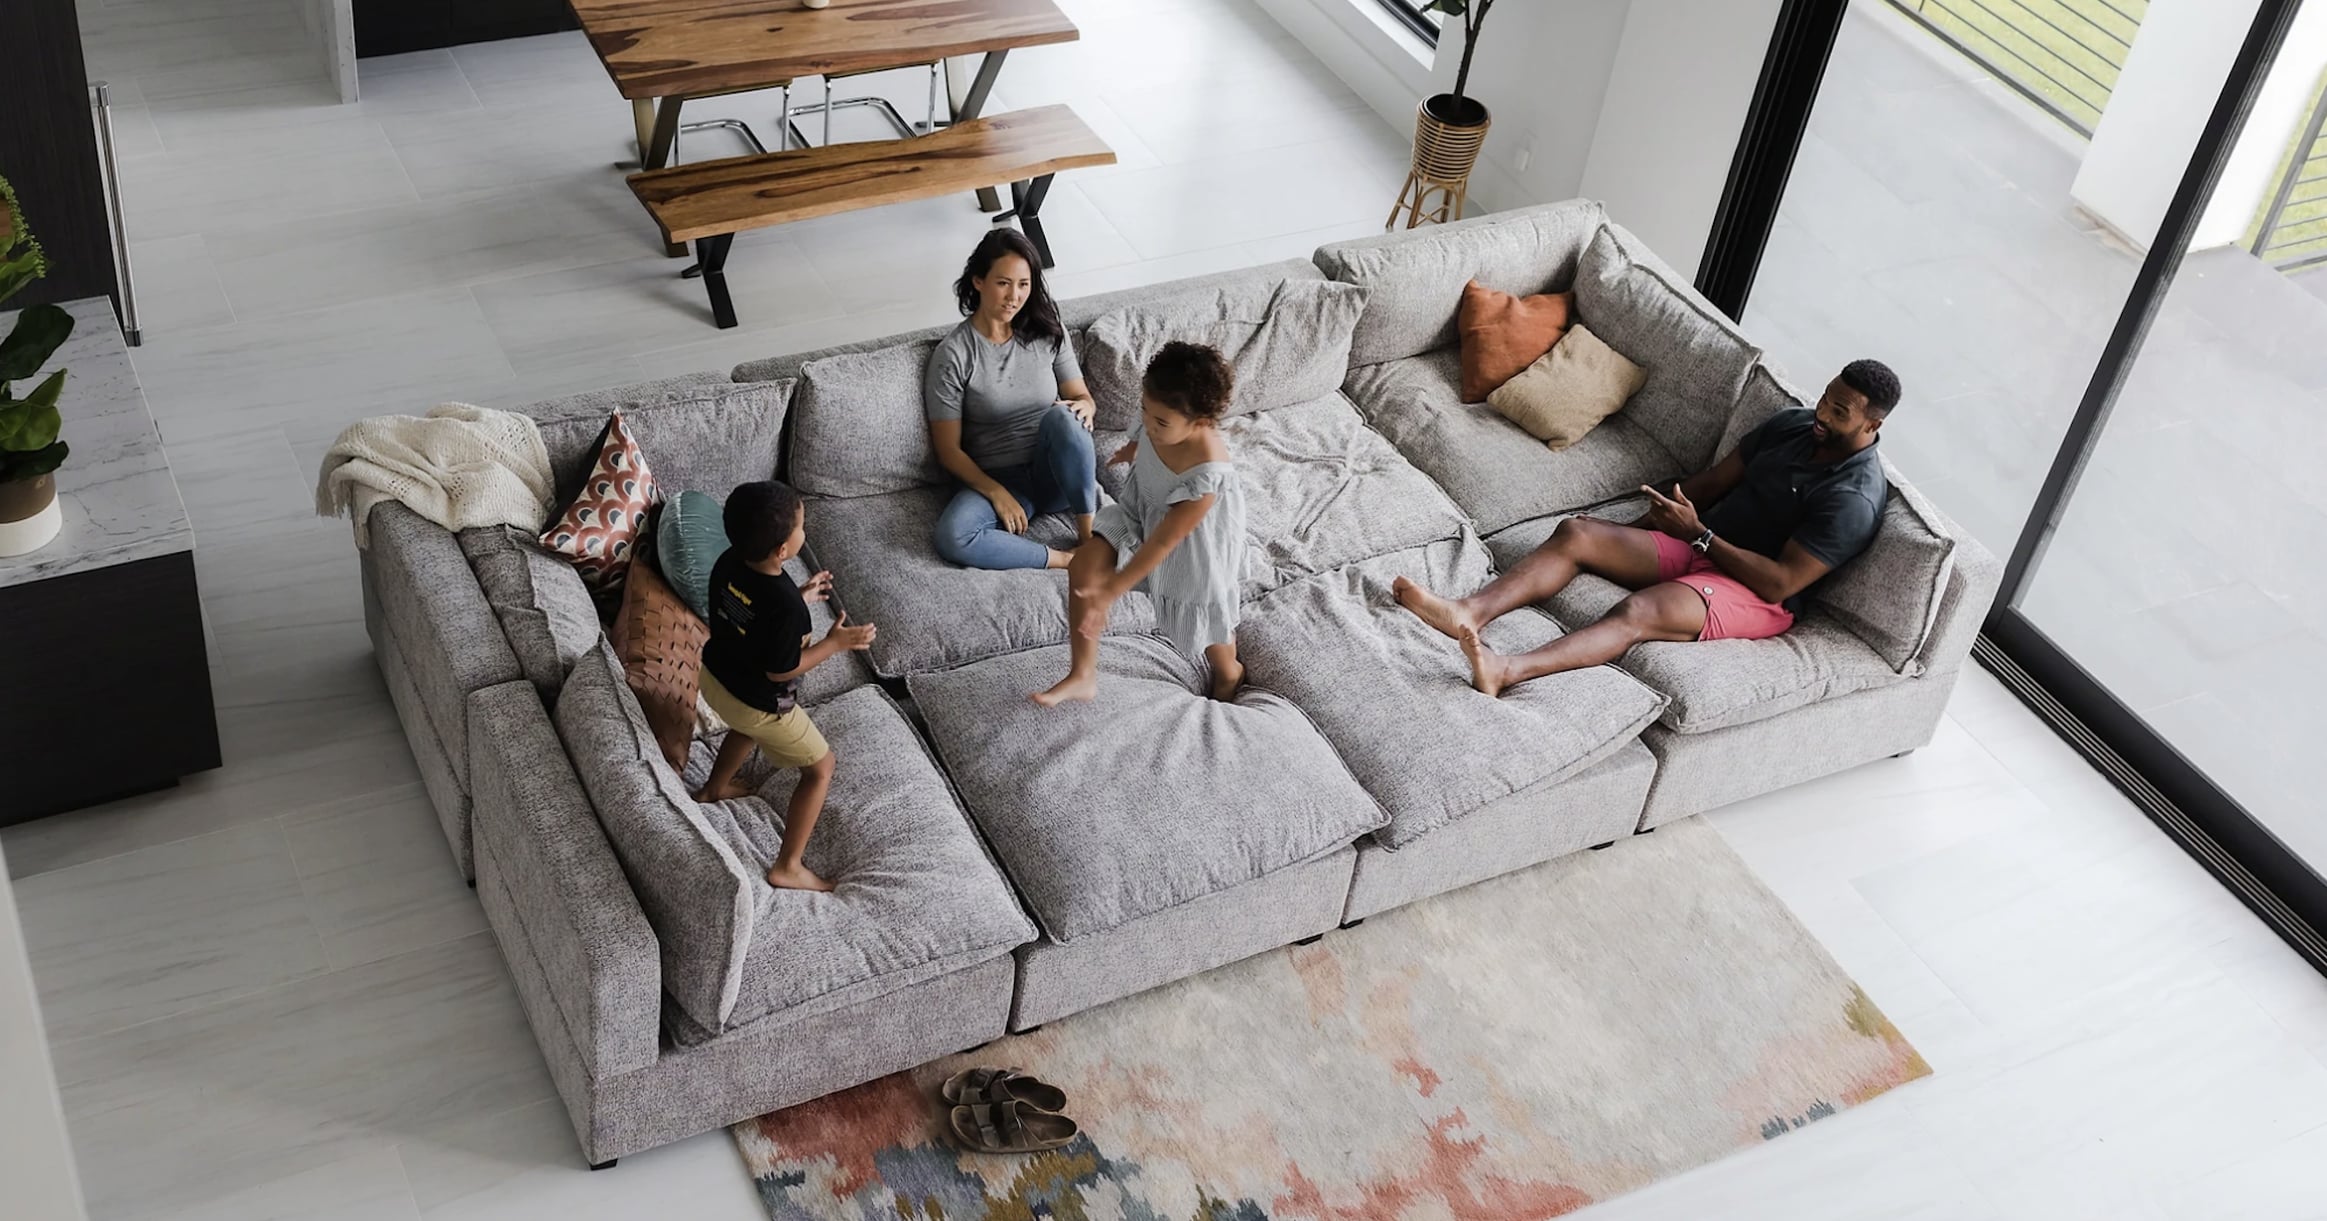 Great Deals on Living Room Furniture